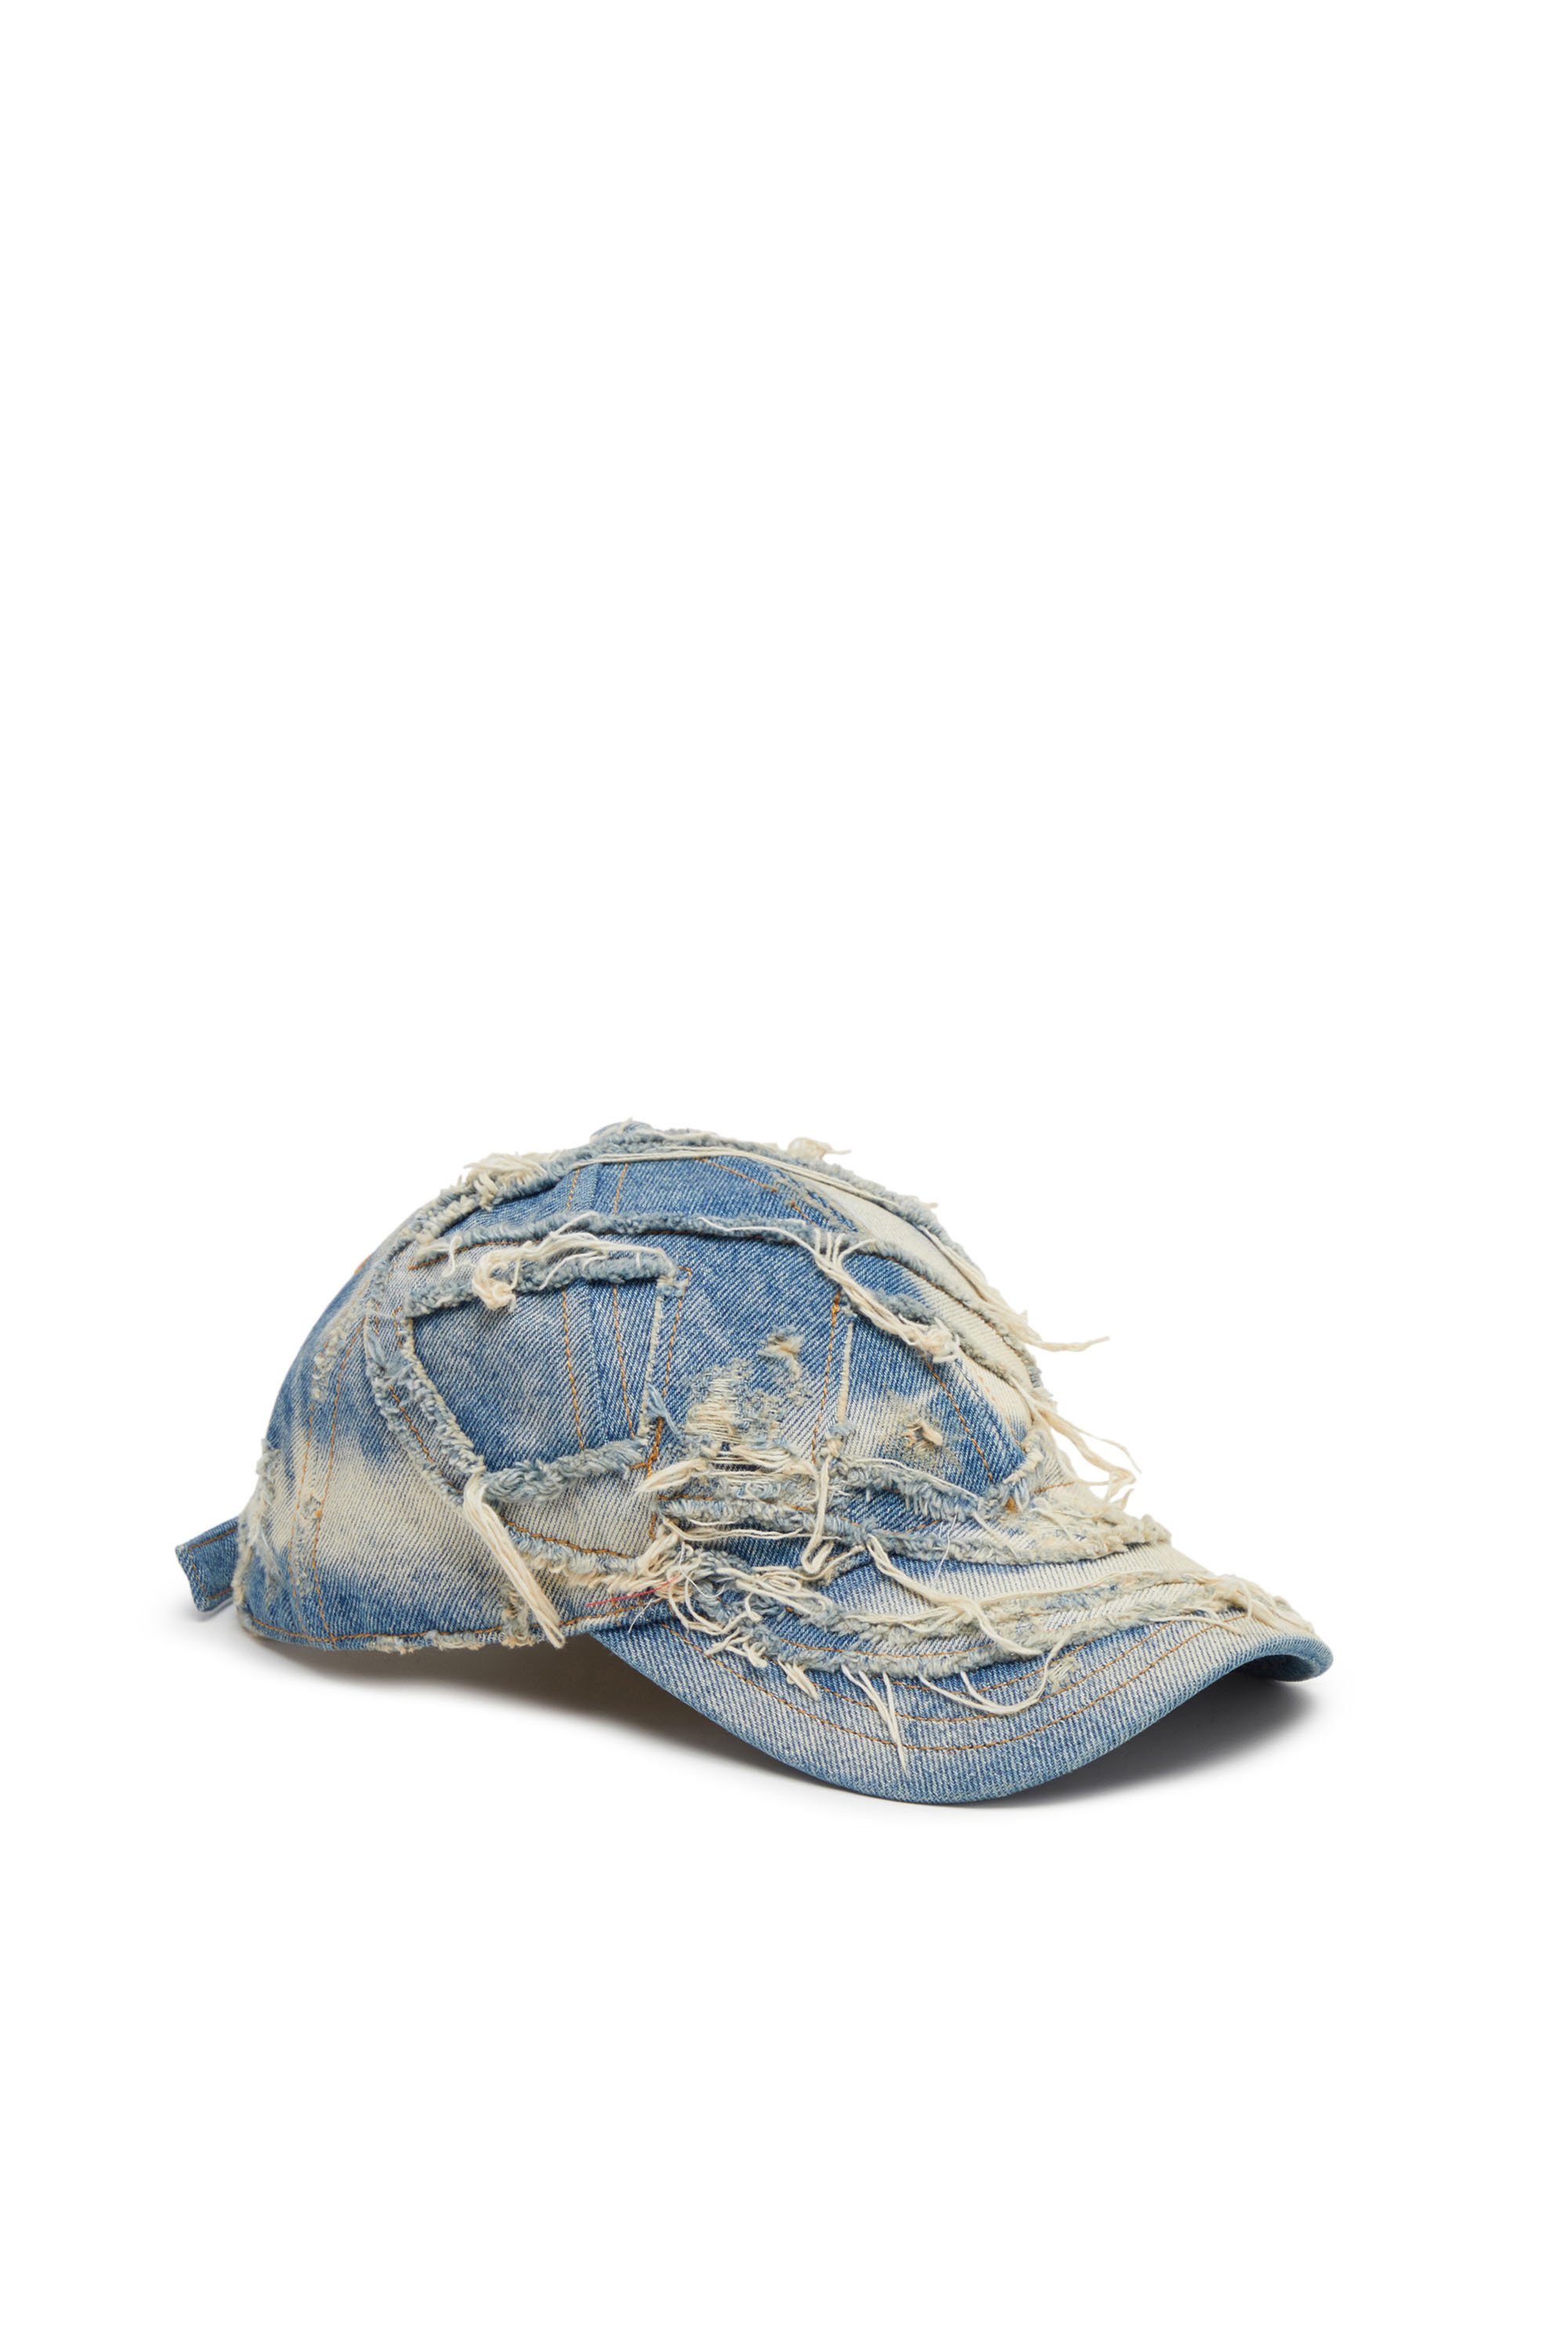 Diesel - Baseball hat in destroyed denim - Caps - Man - Blue